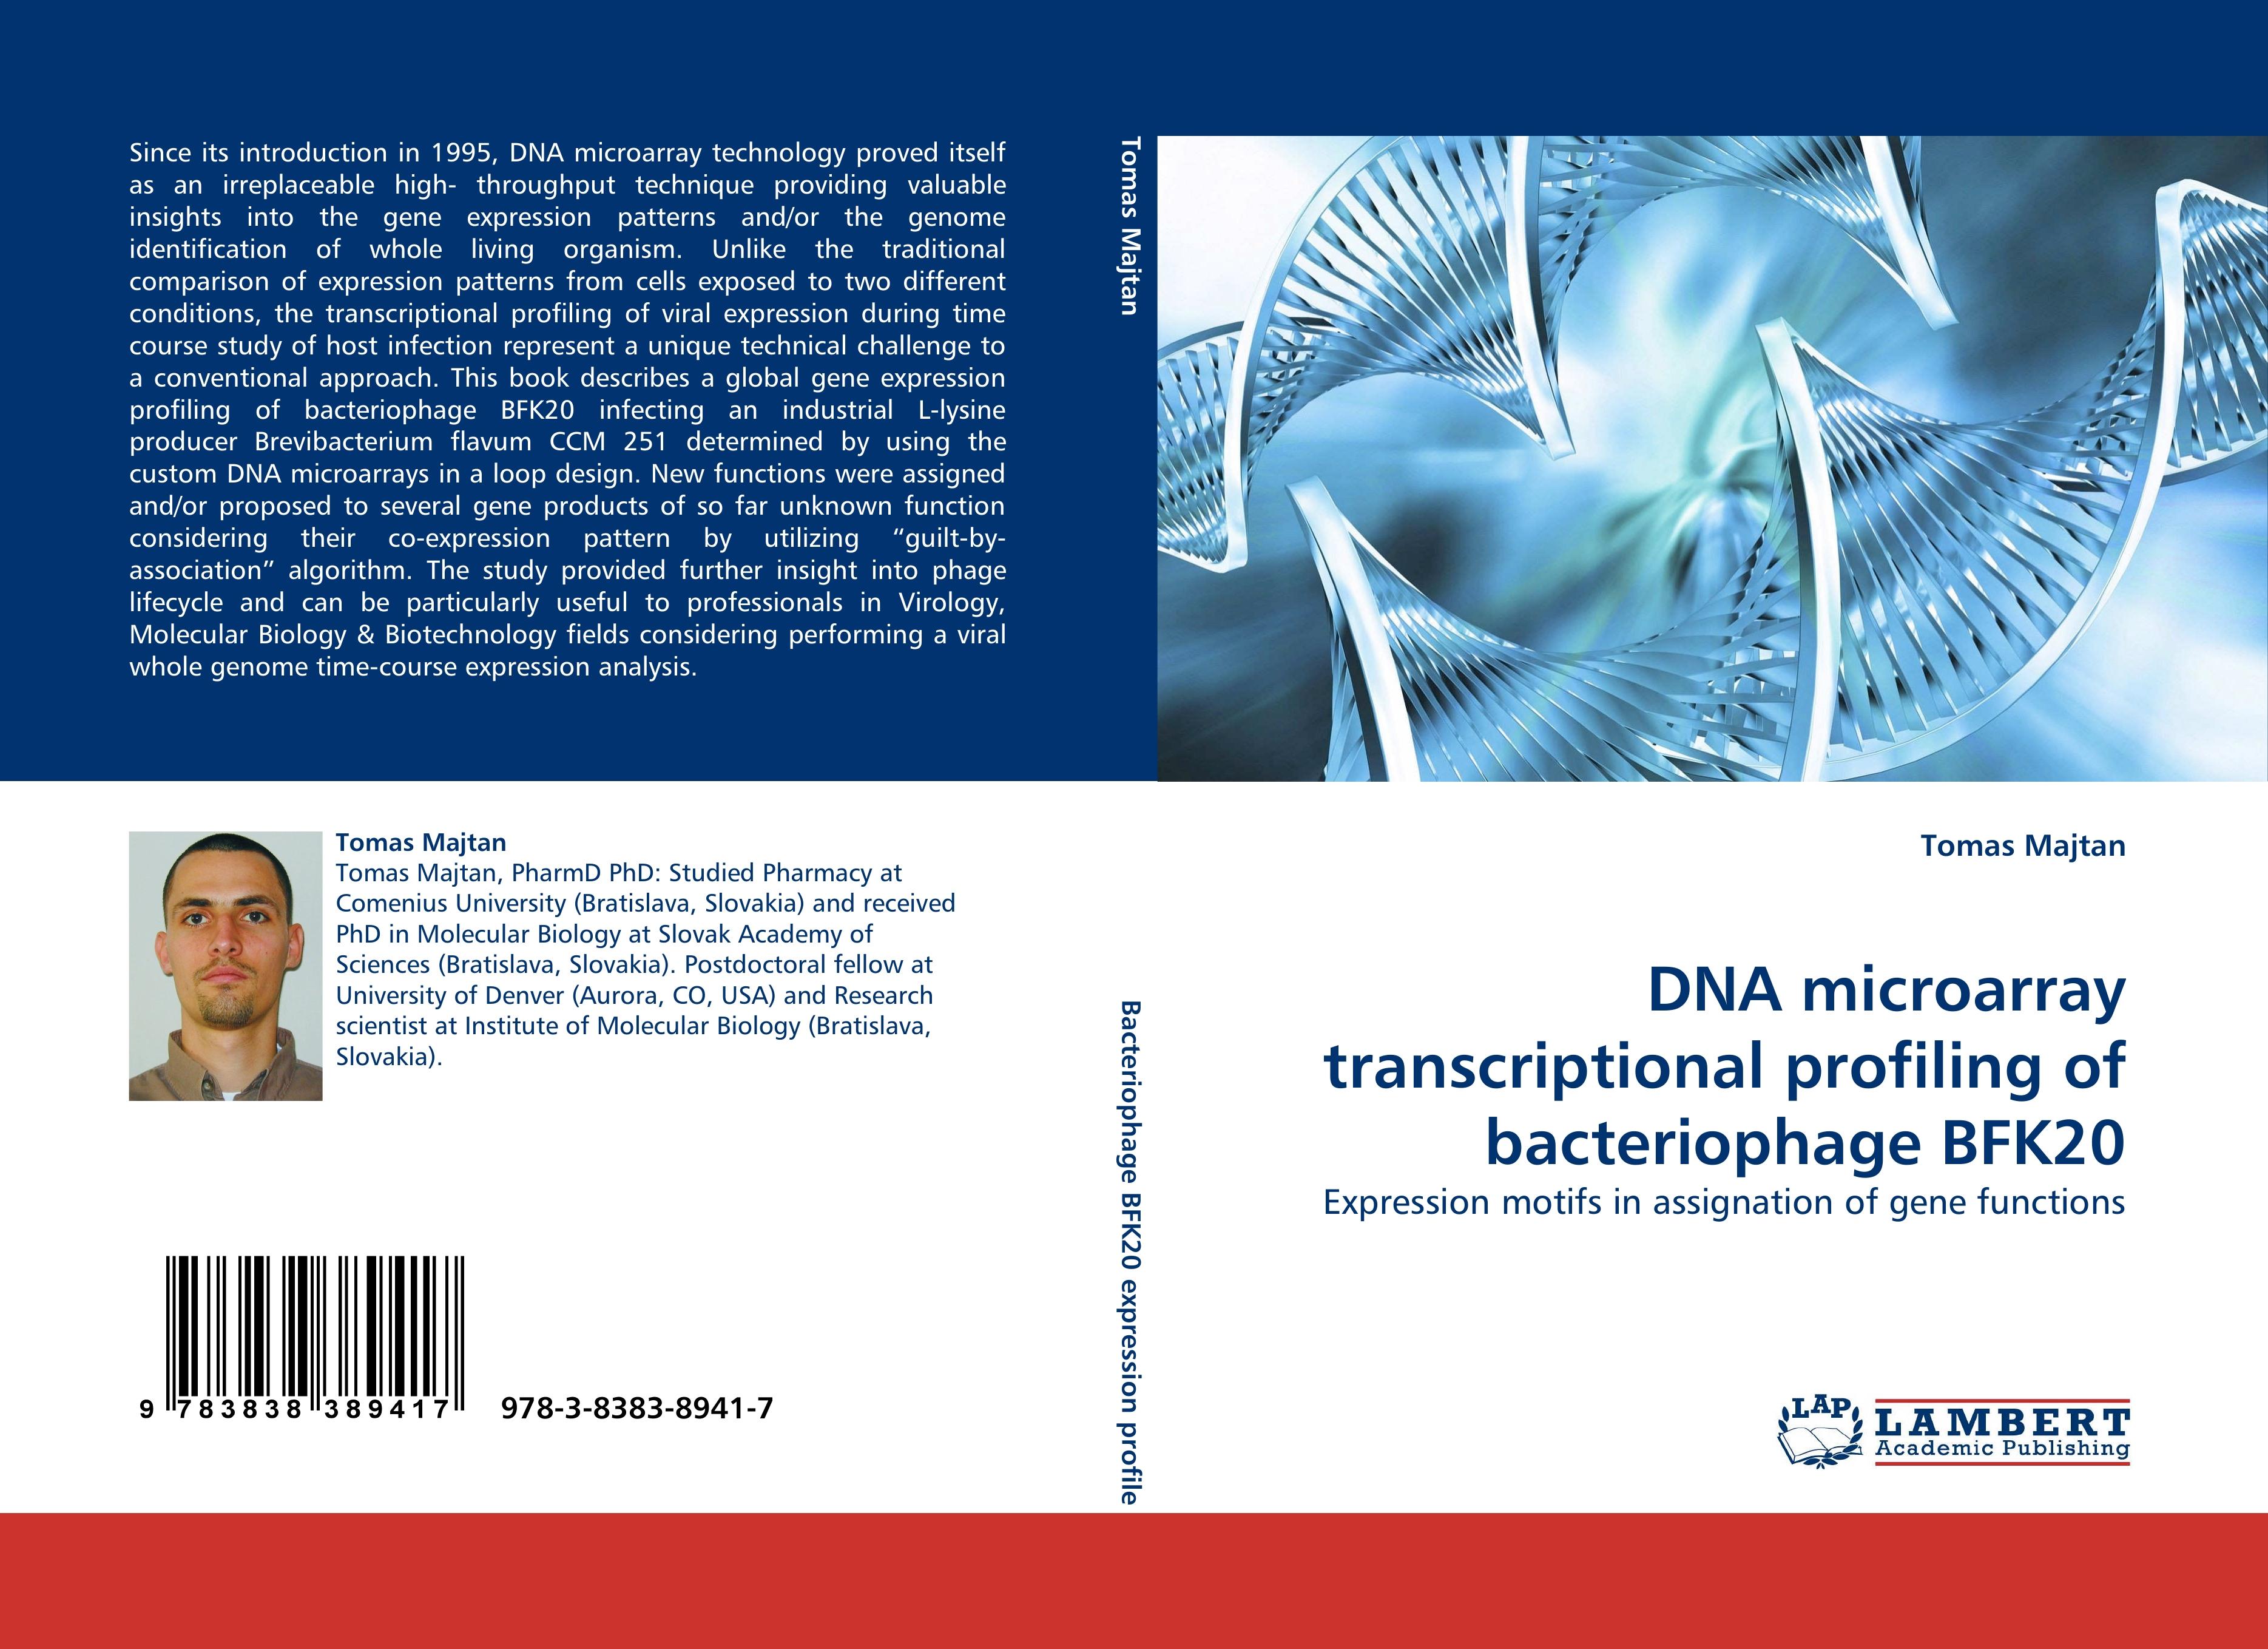 DNA microarray transcriptional profiling of bacteriophage BFK20 - Tomas Majtan